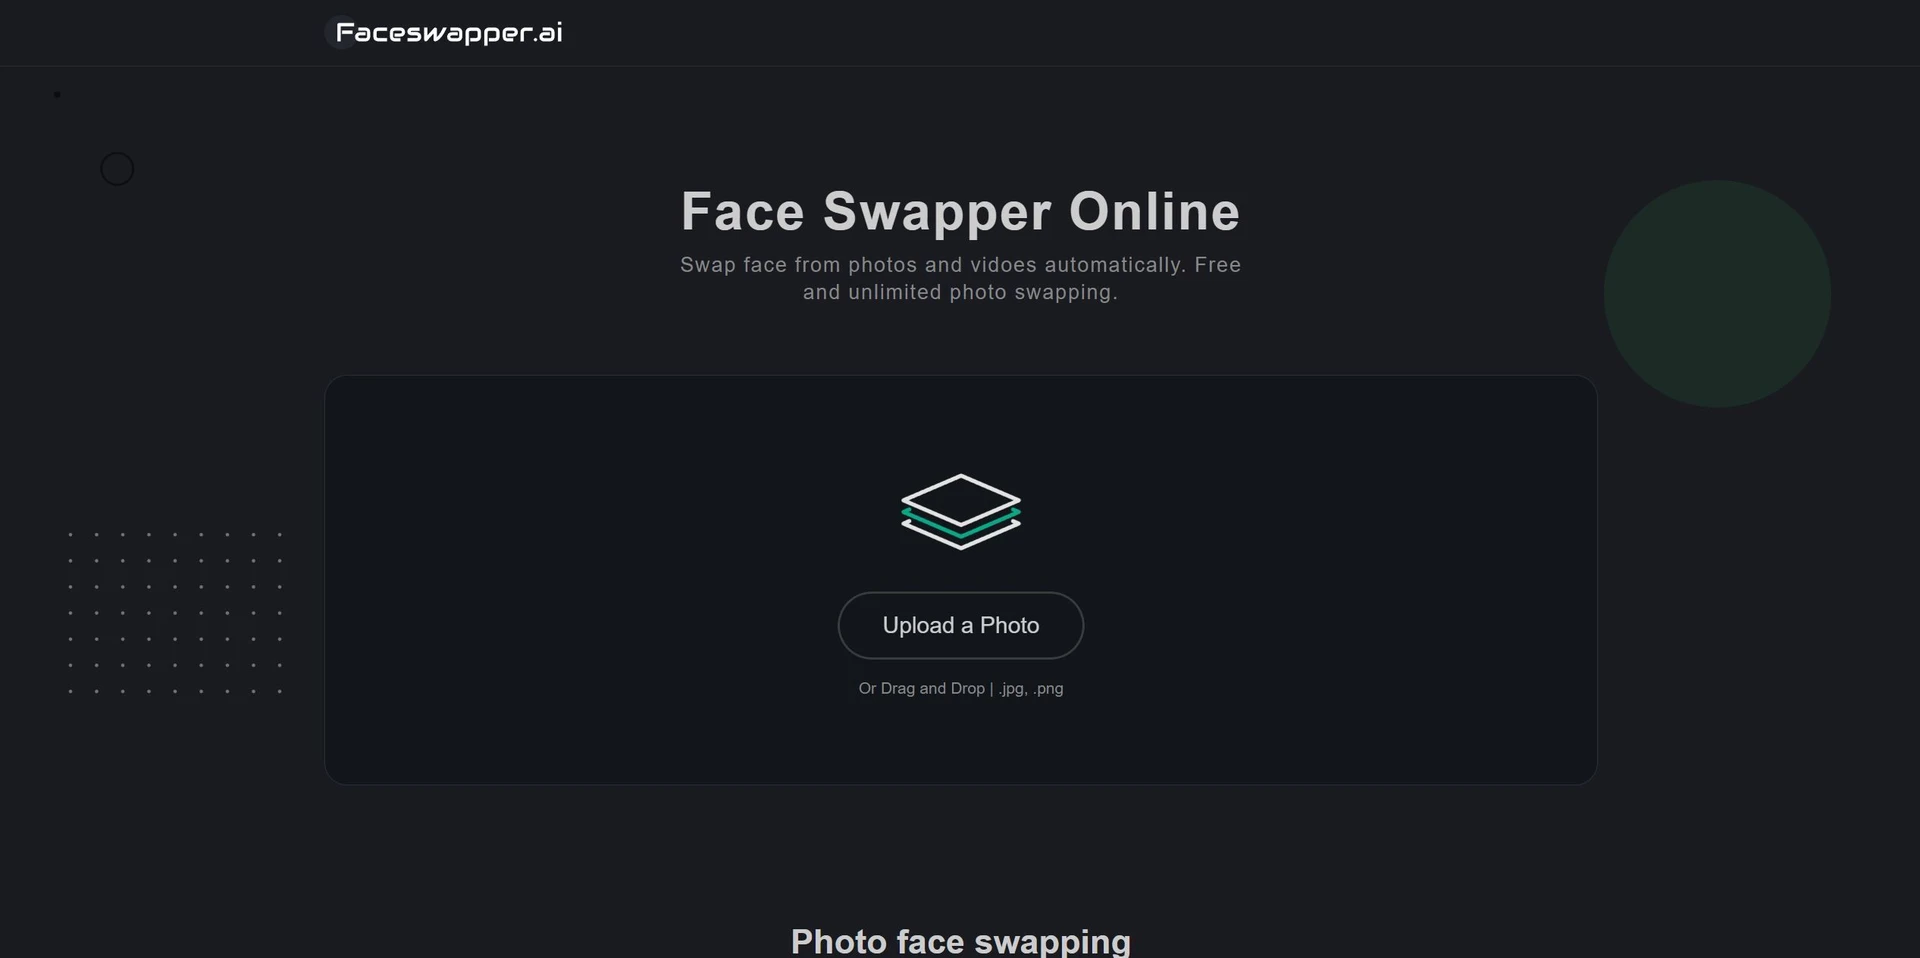 FaceSwapperwebsite picture